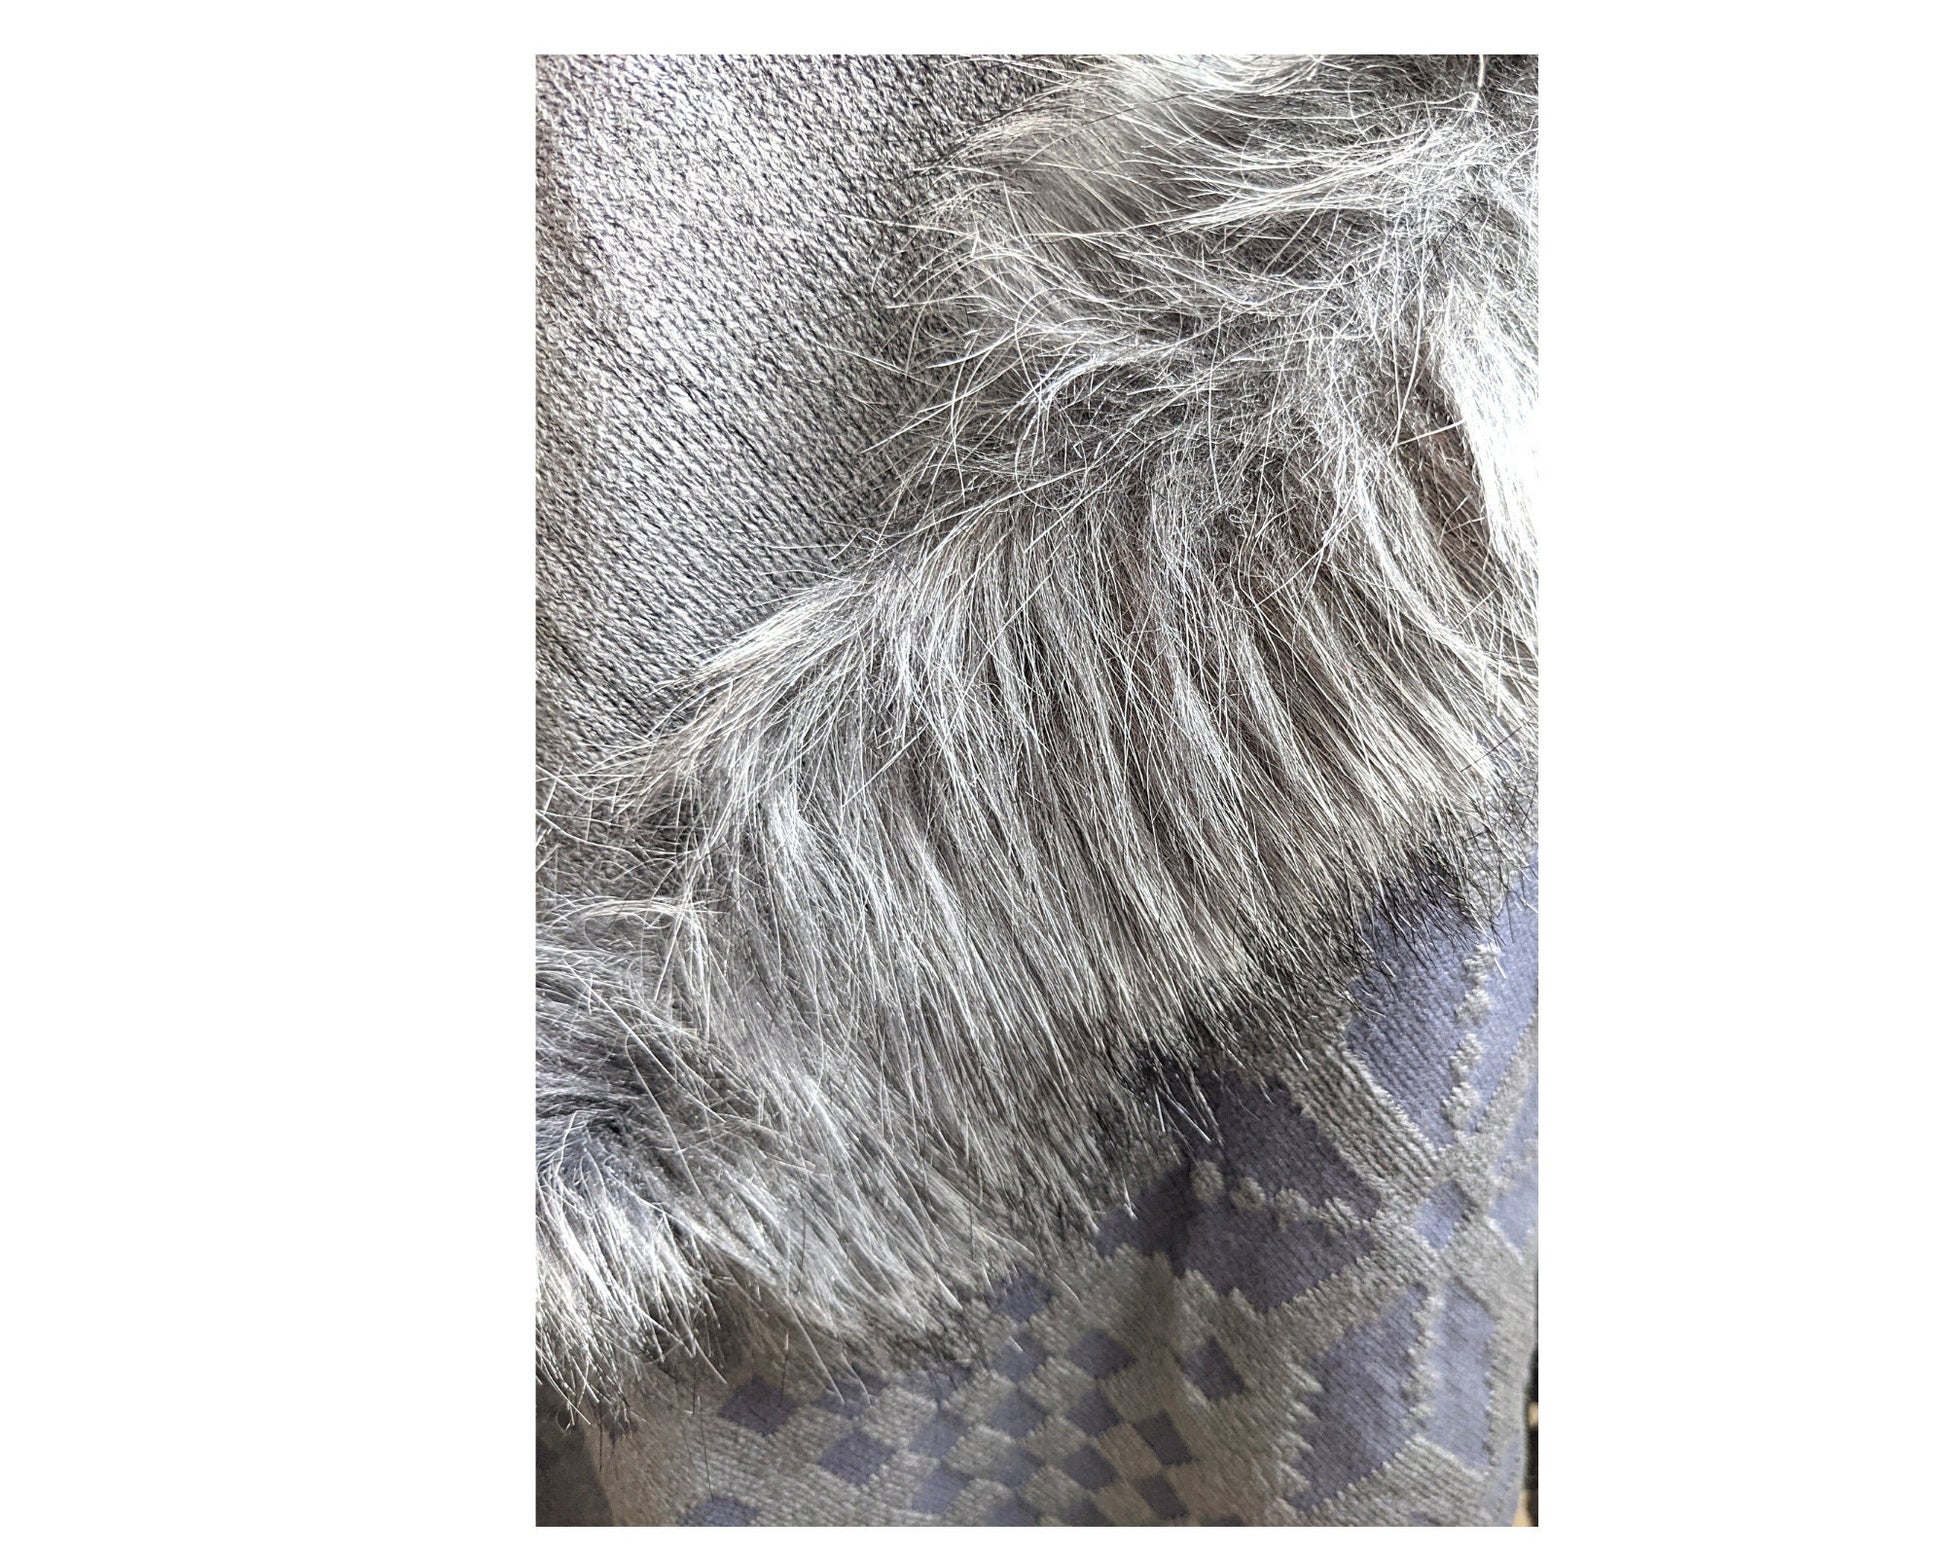 One Size Merino Wool Poncho For Women - Craft Bazaar